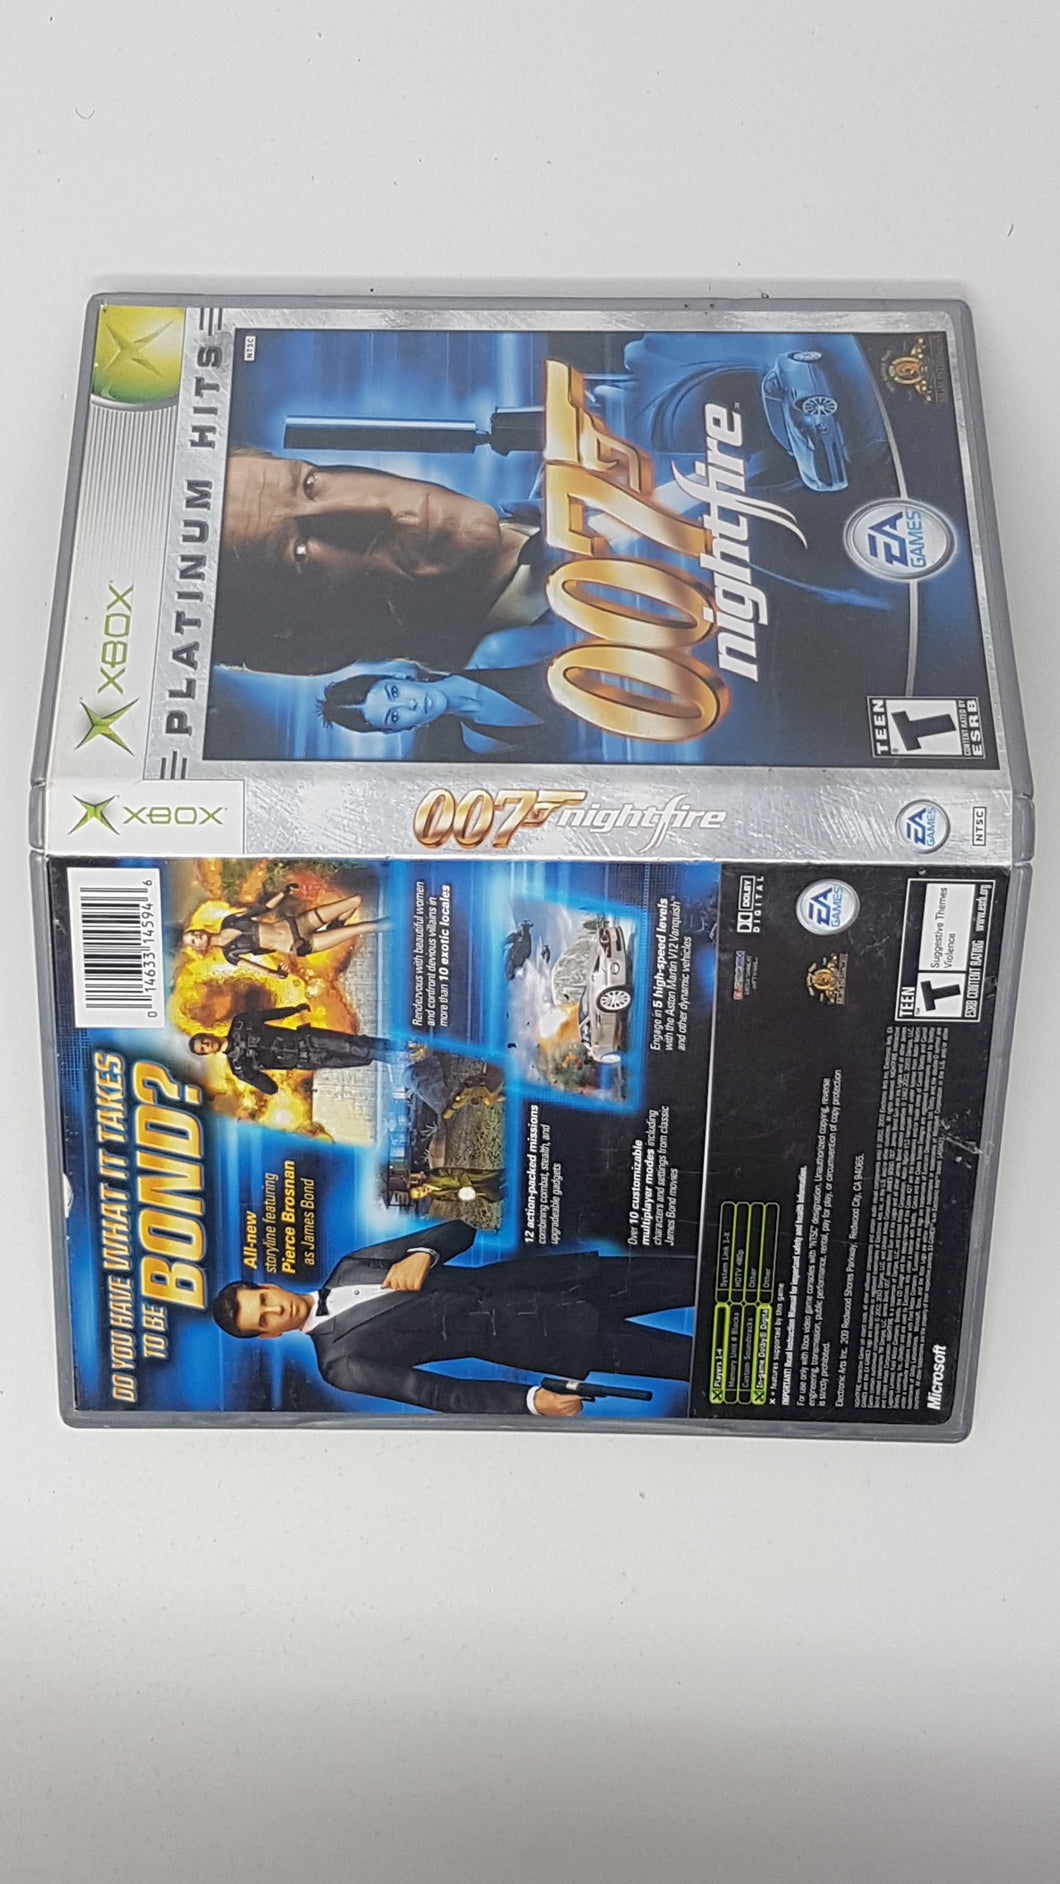 007 Nightfire [Platinum Hits] [box] - Microsoft Xbox